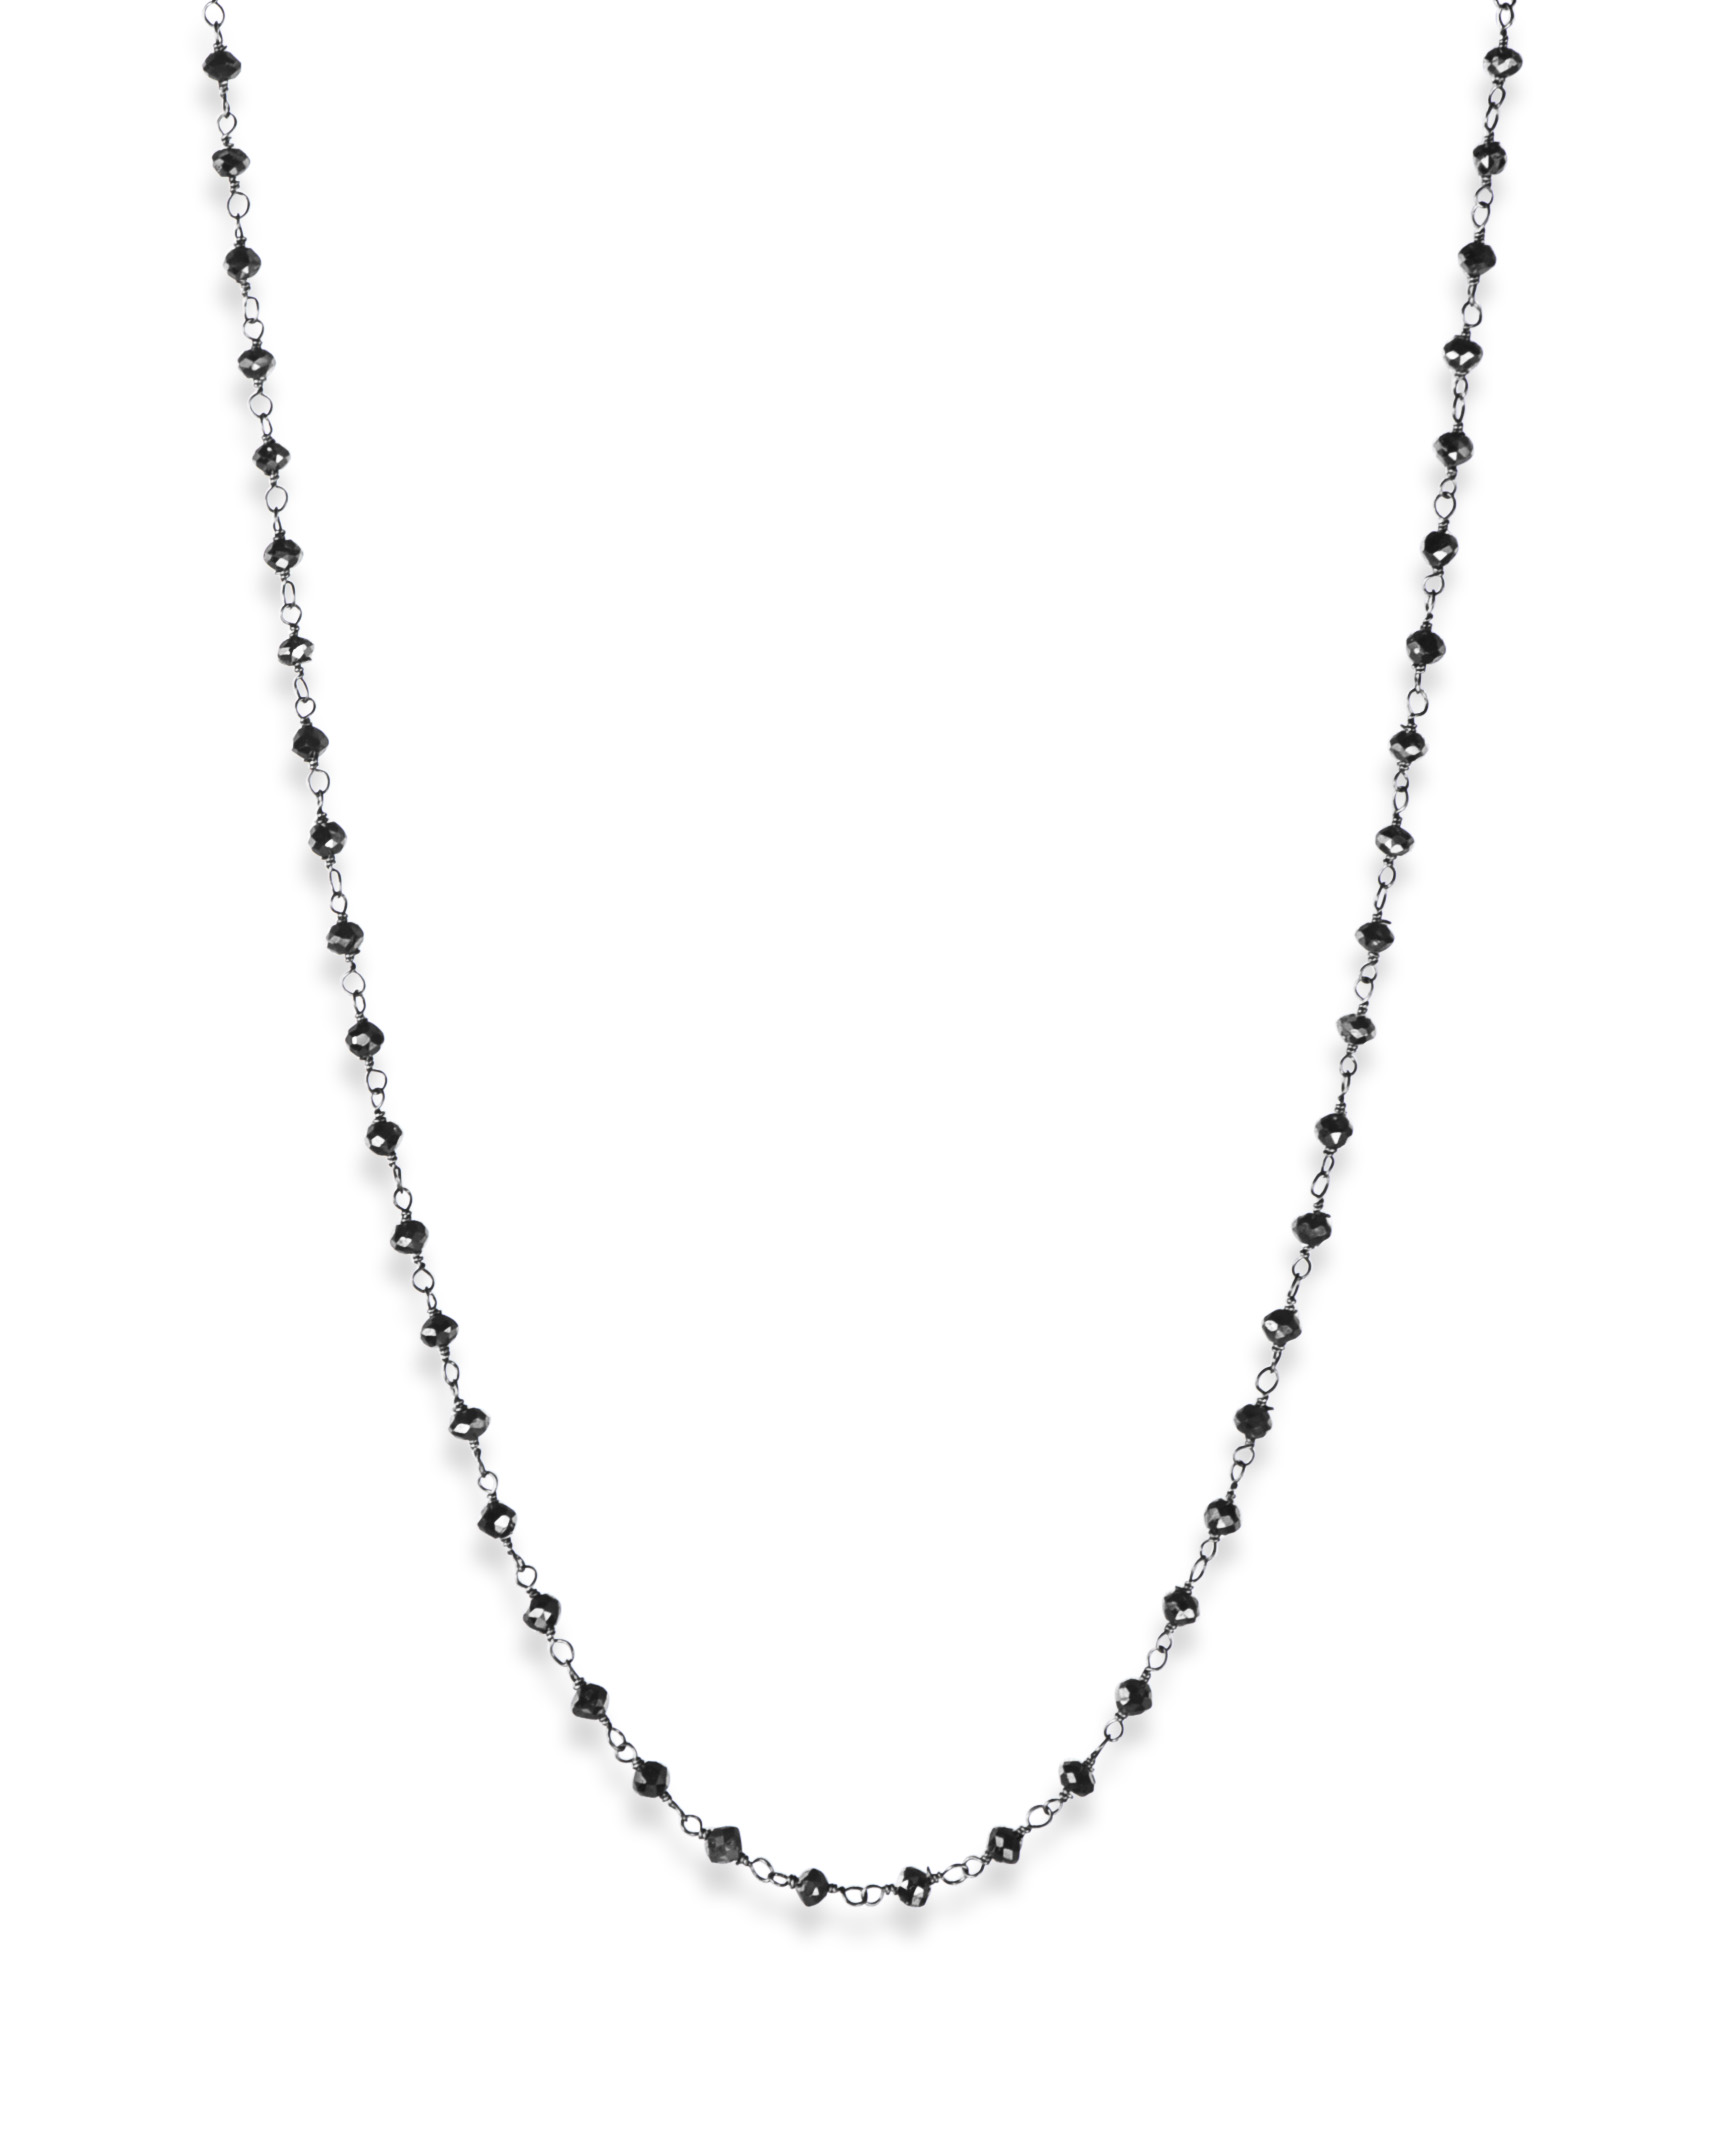 Black Diamond Bead Necklace - Turgeon Raine